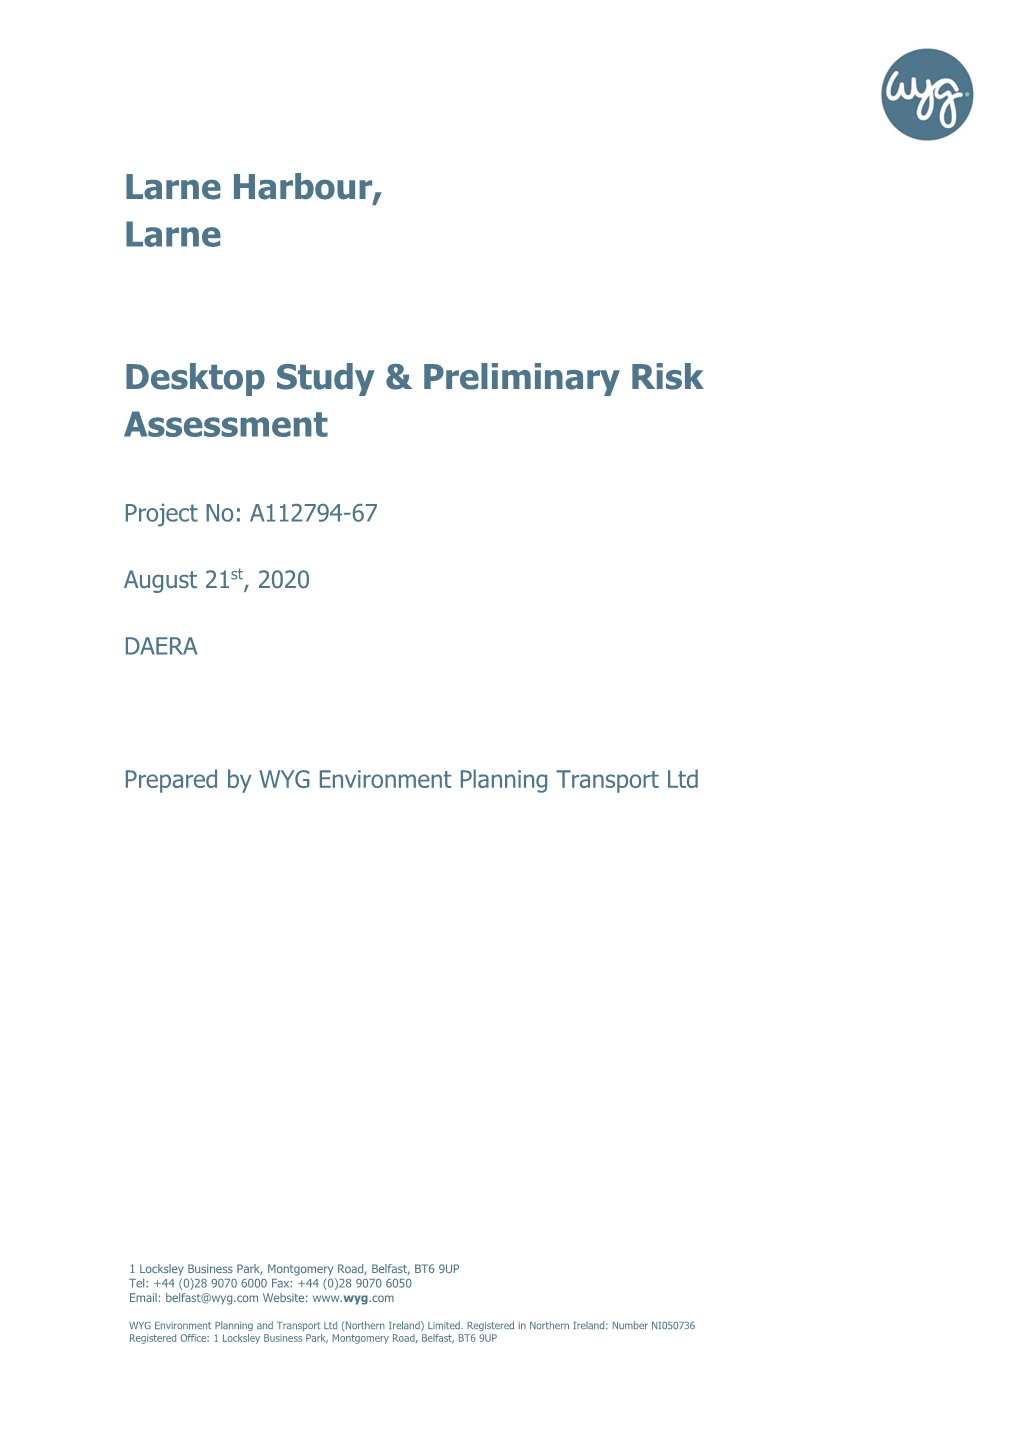 Larne Harbour, Larne Desktop Study & Preliminary Risk Assessment